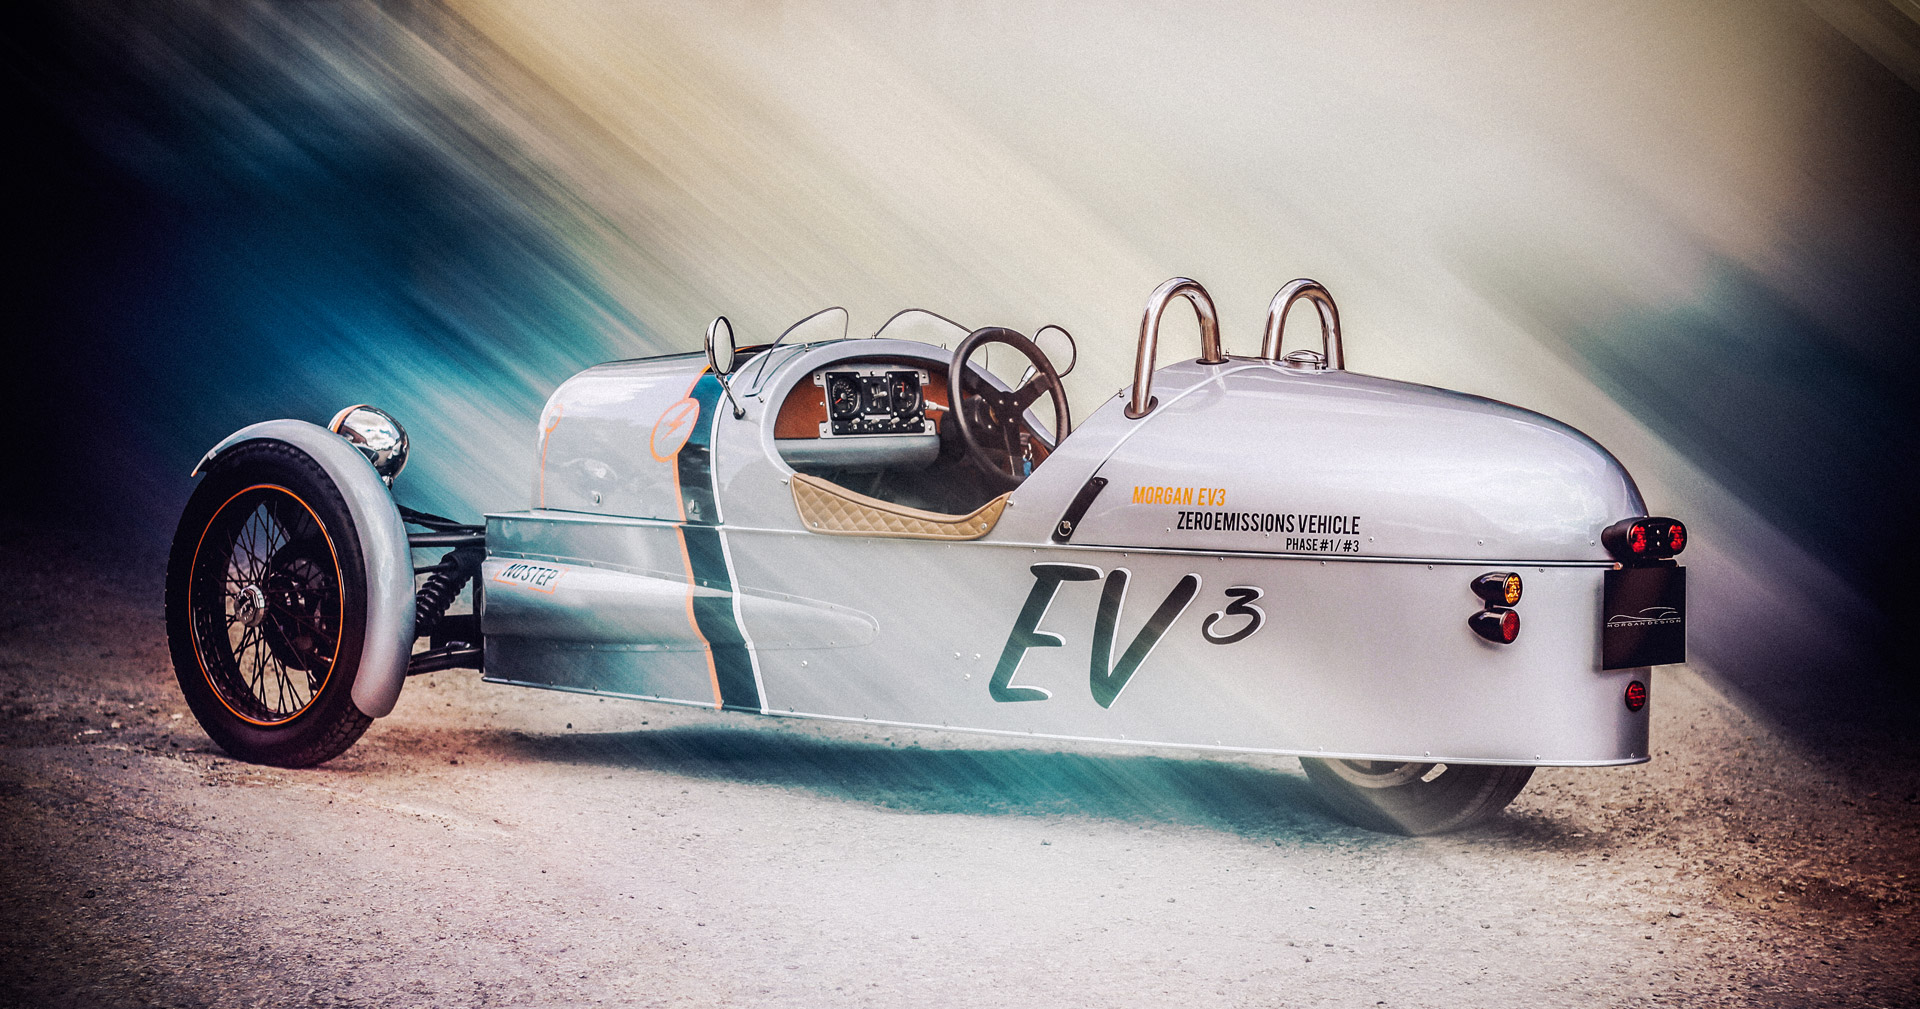 morgan-ev3-electric-3-wheeler-prototype_100515749_h.jpg